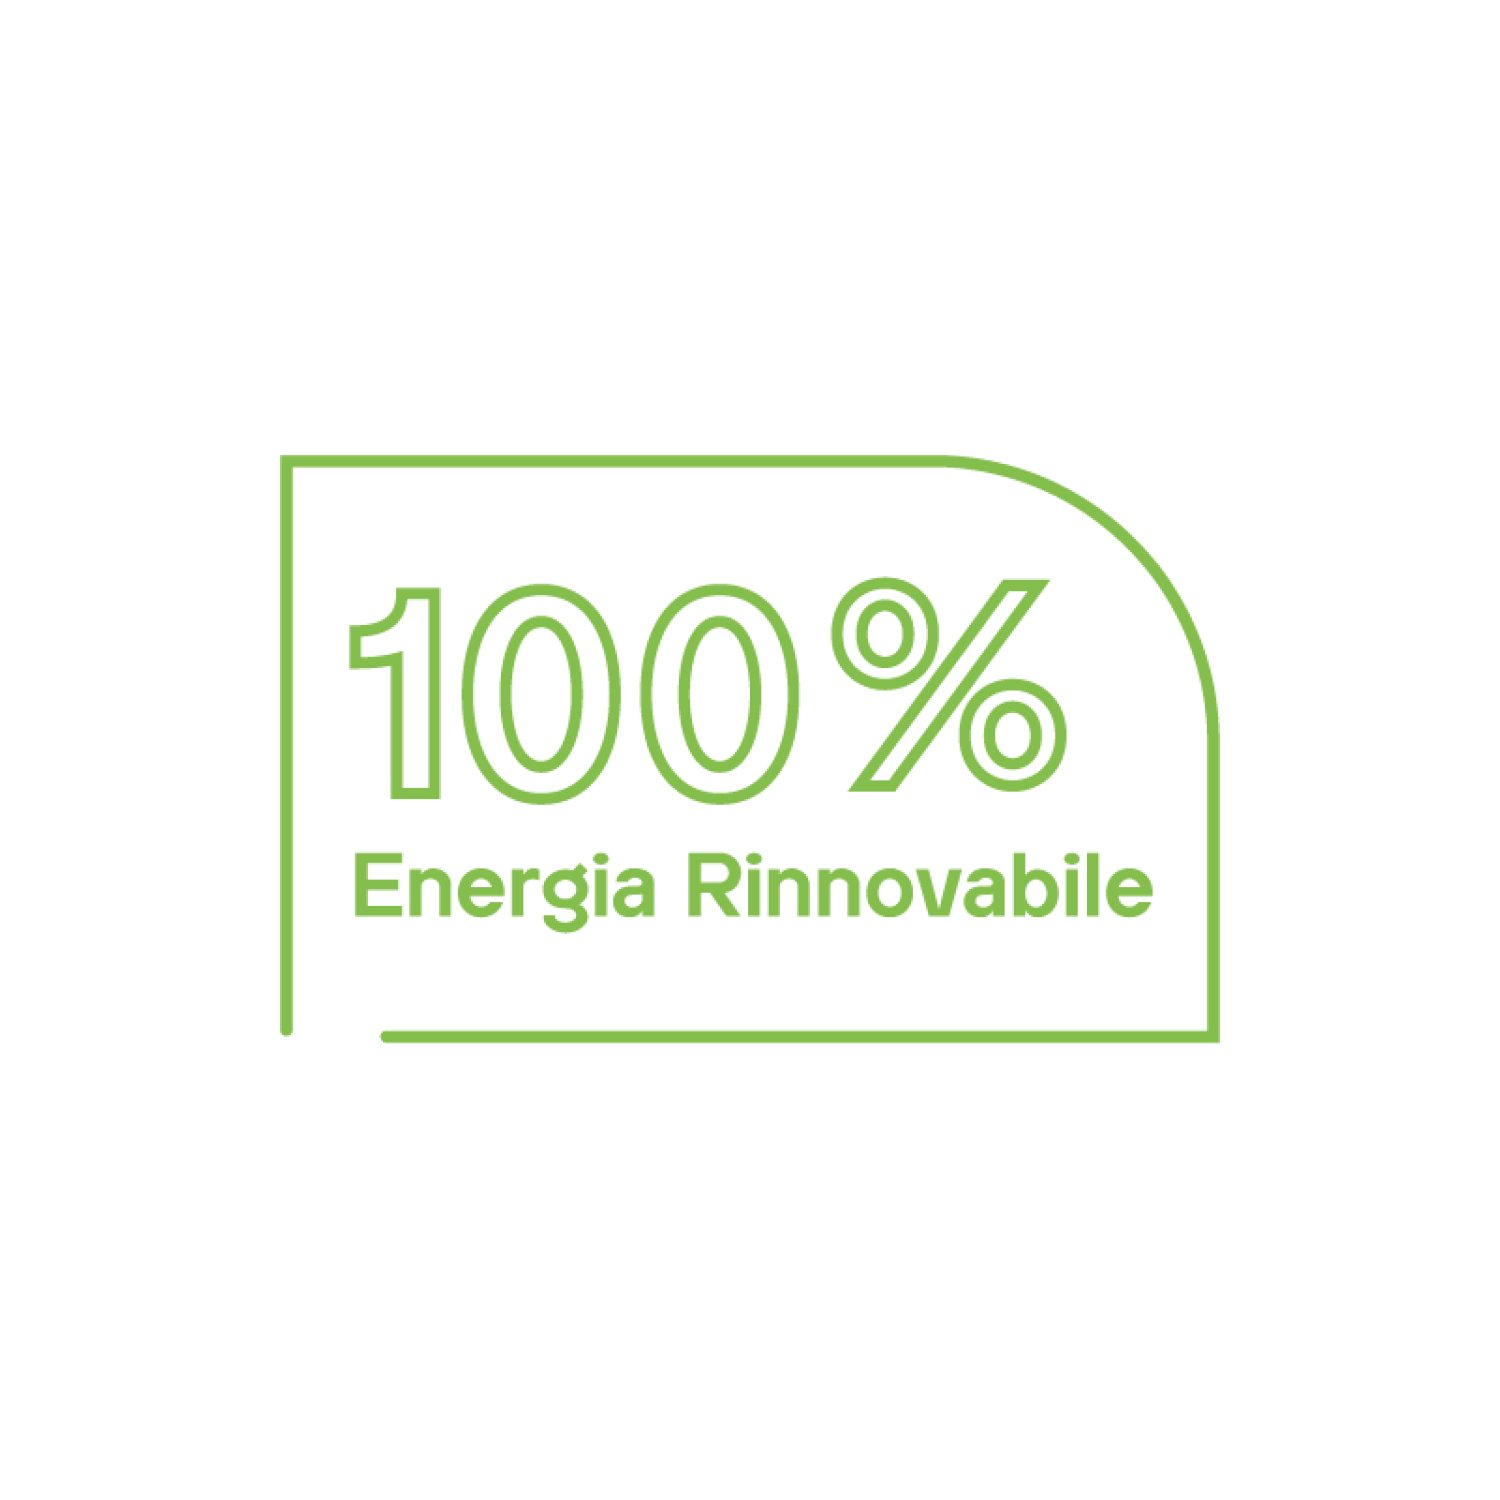 100% ENERGIA.jpg (Copia) (Copia) (Copia) (Copia)